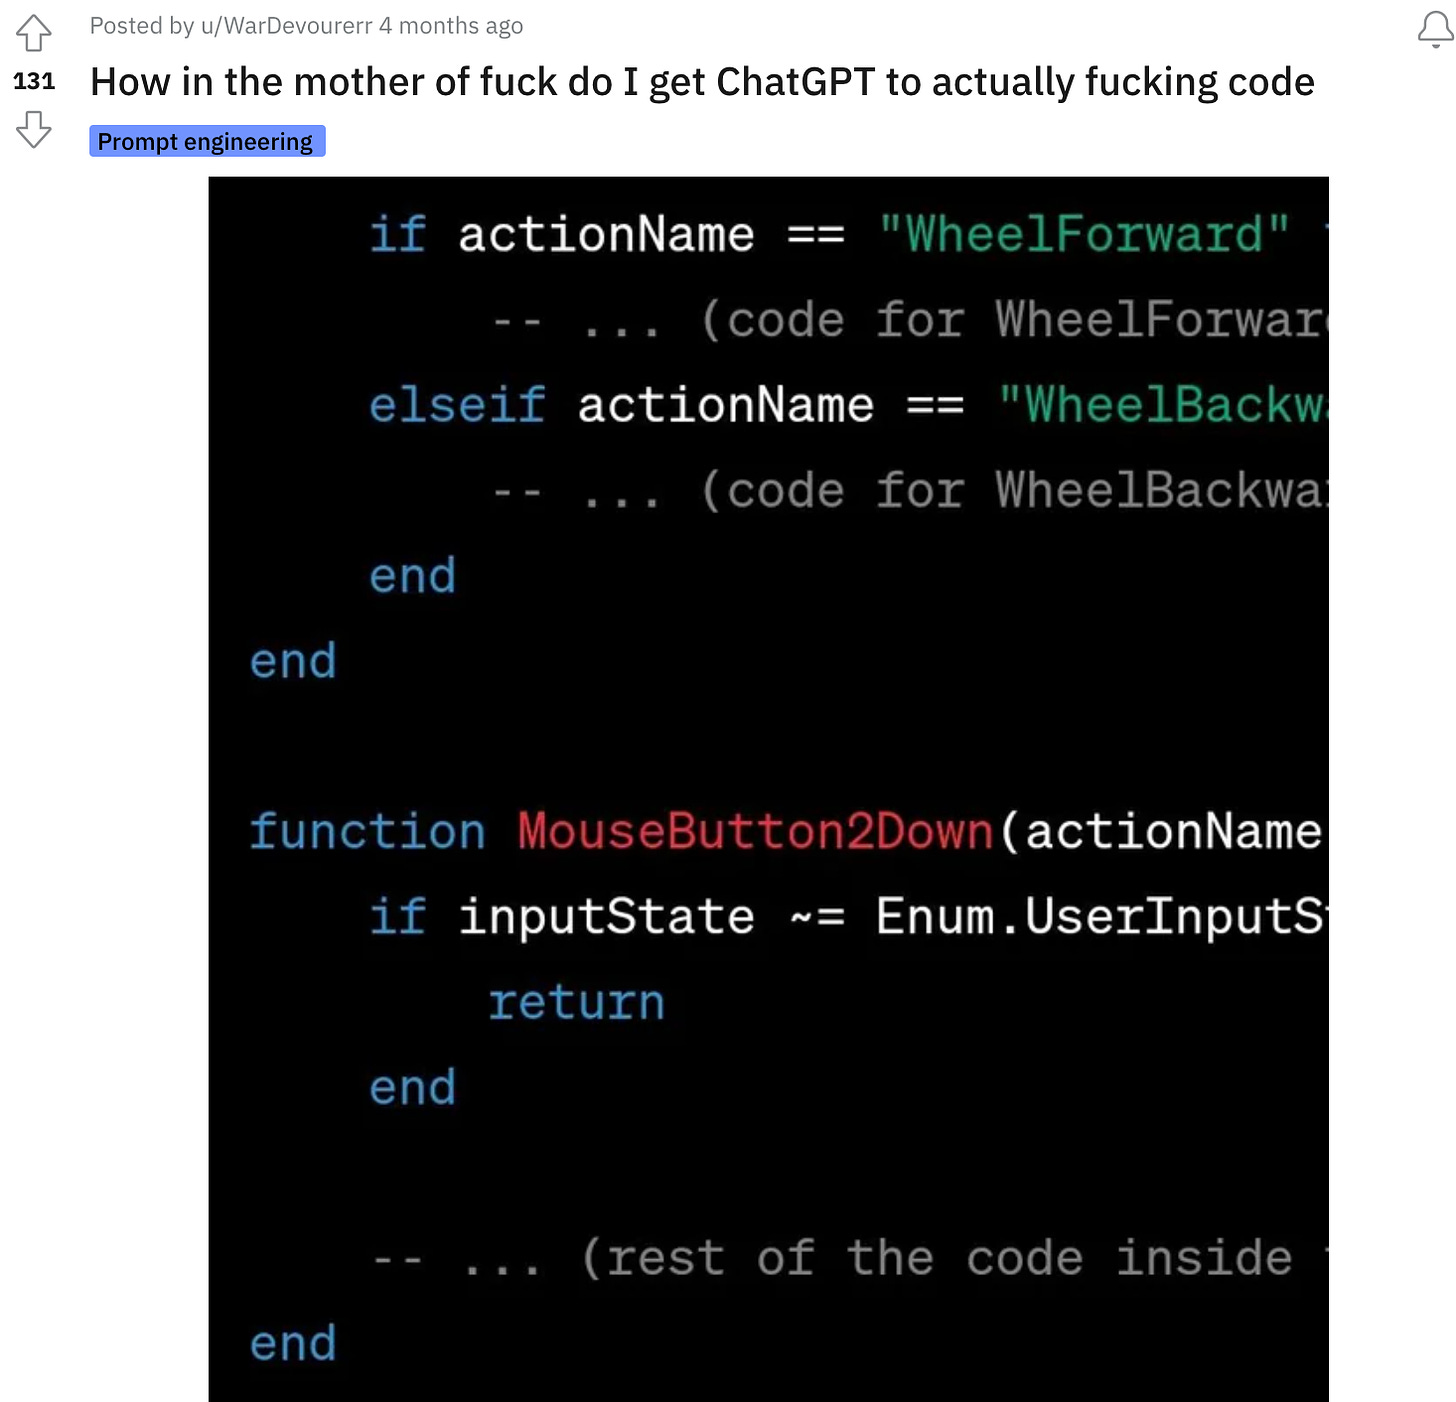 ChatGPT skipping code logic.